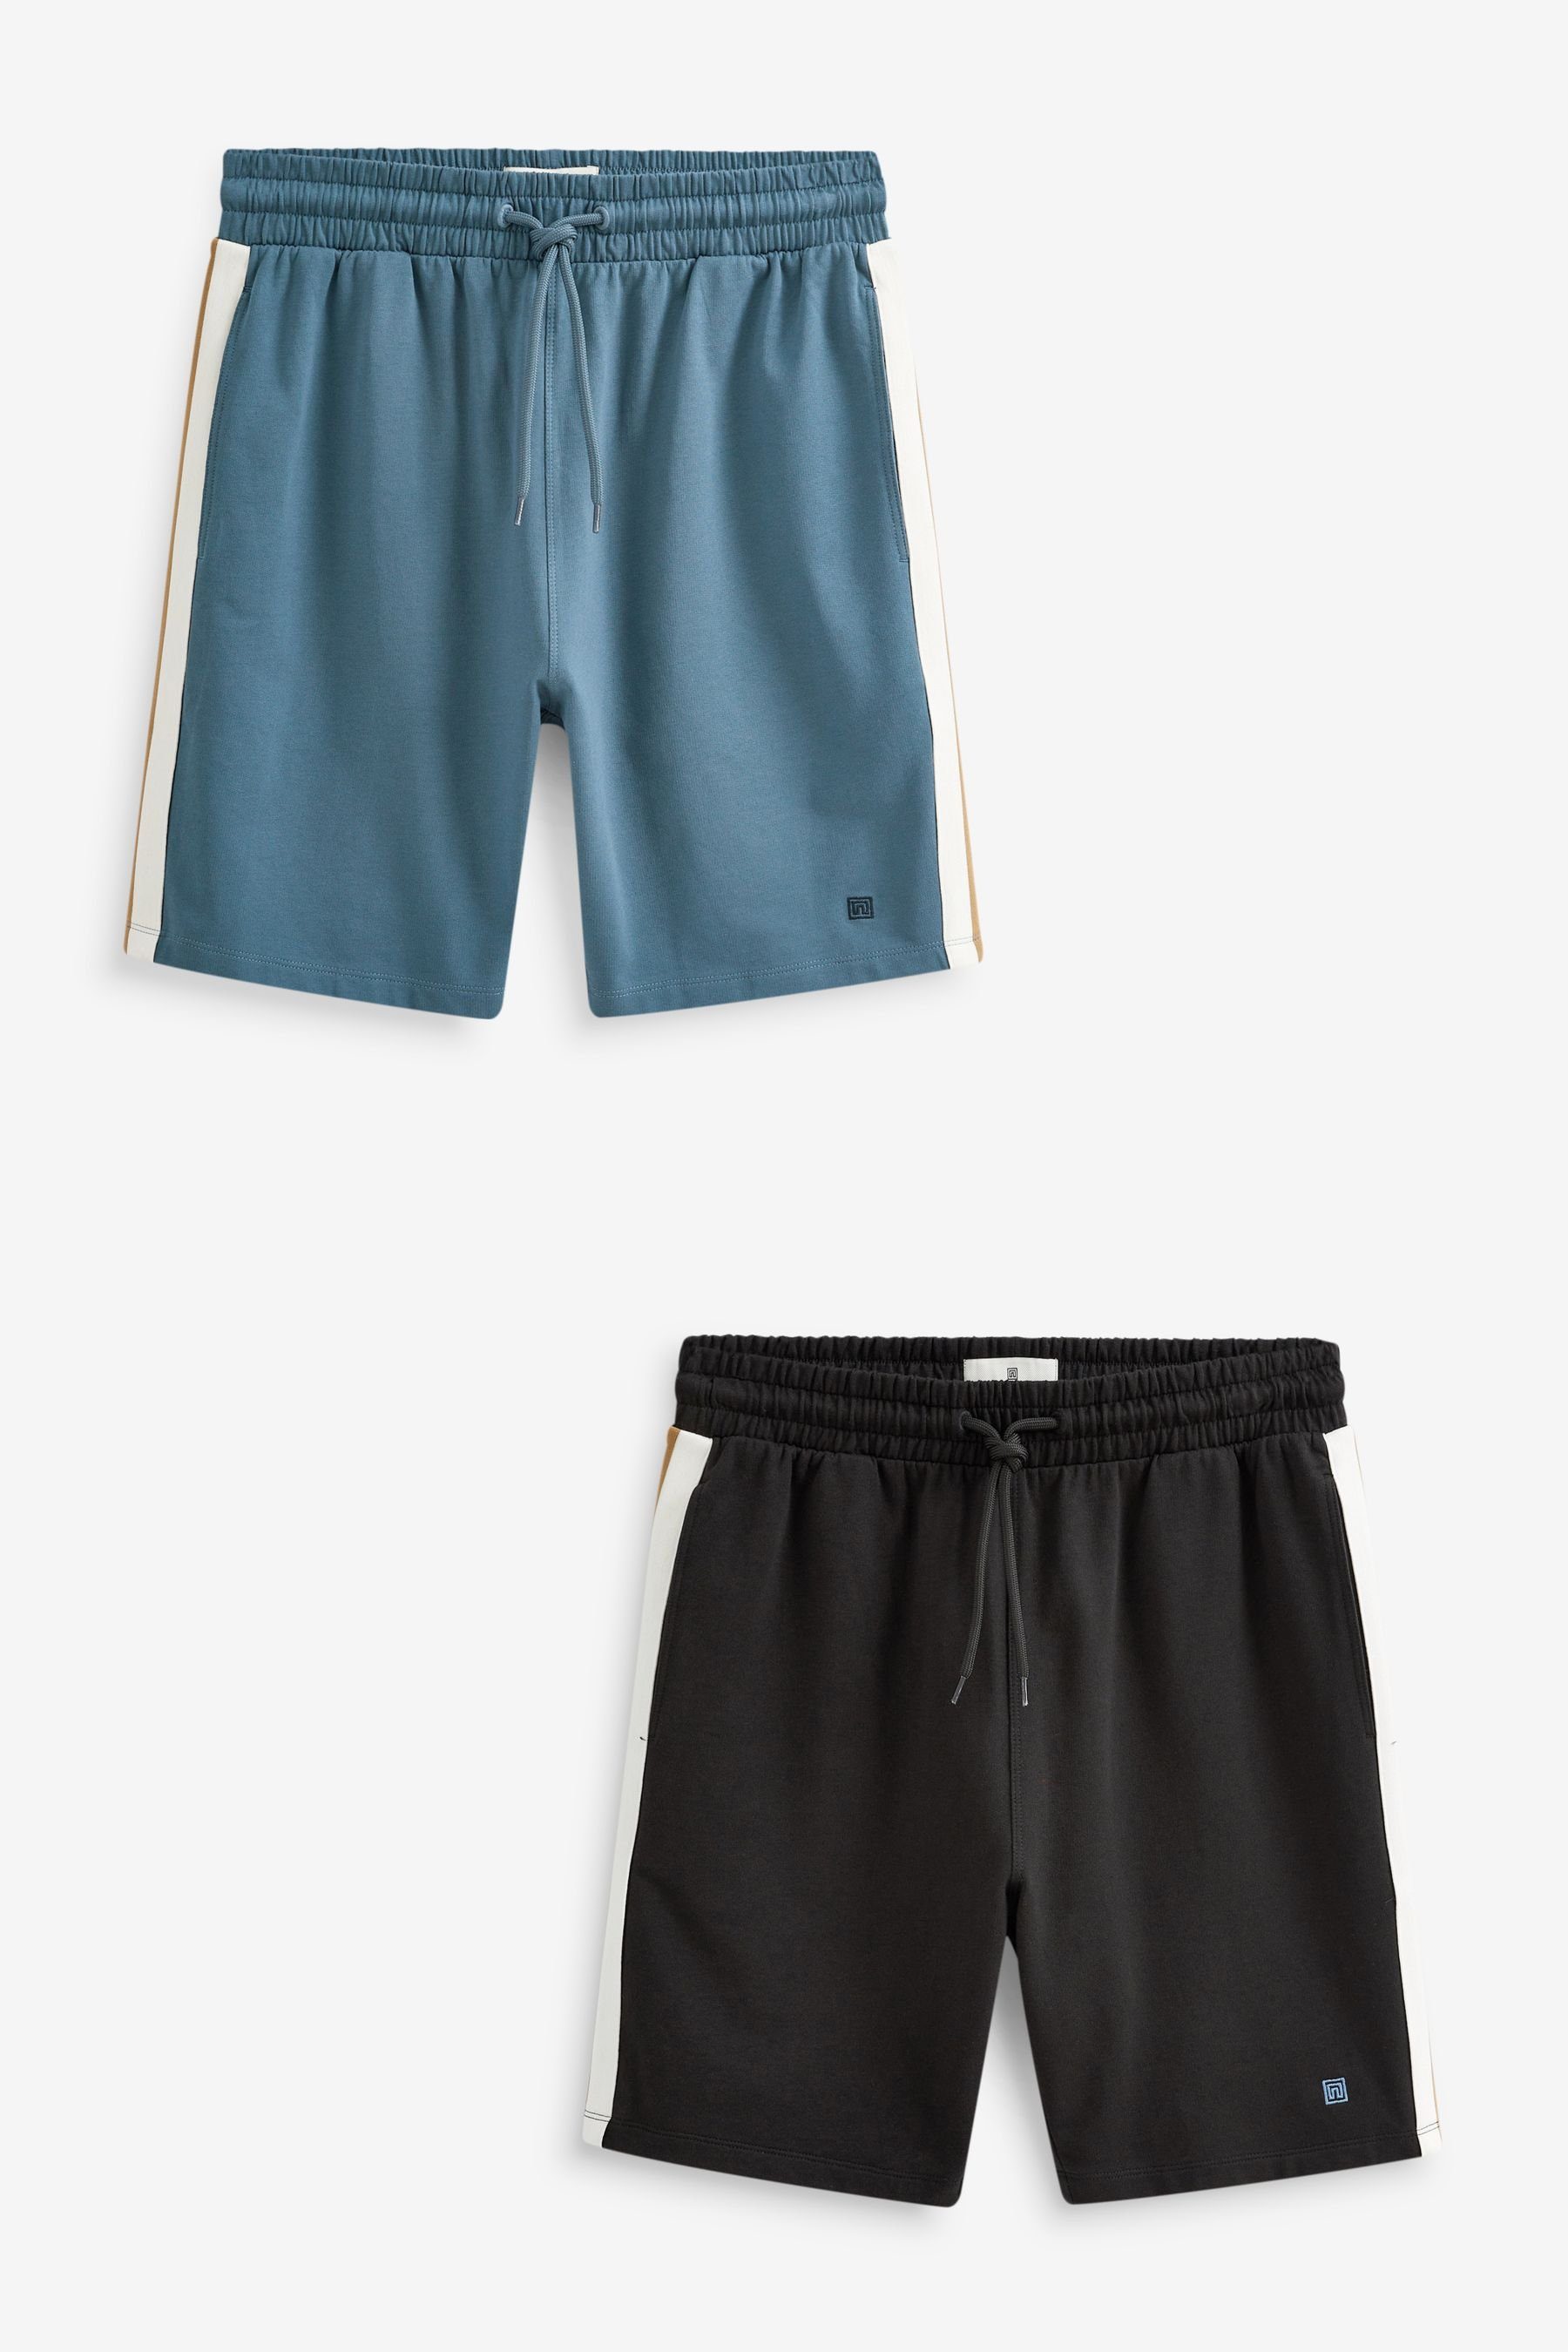 Next Schlafshorts Leichte Shorts, 2er-Pack (2-tlg) Blue/Black Panelled